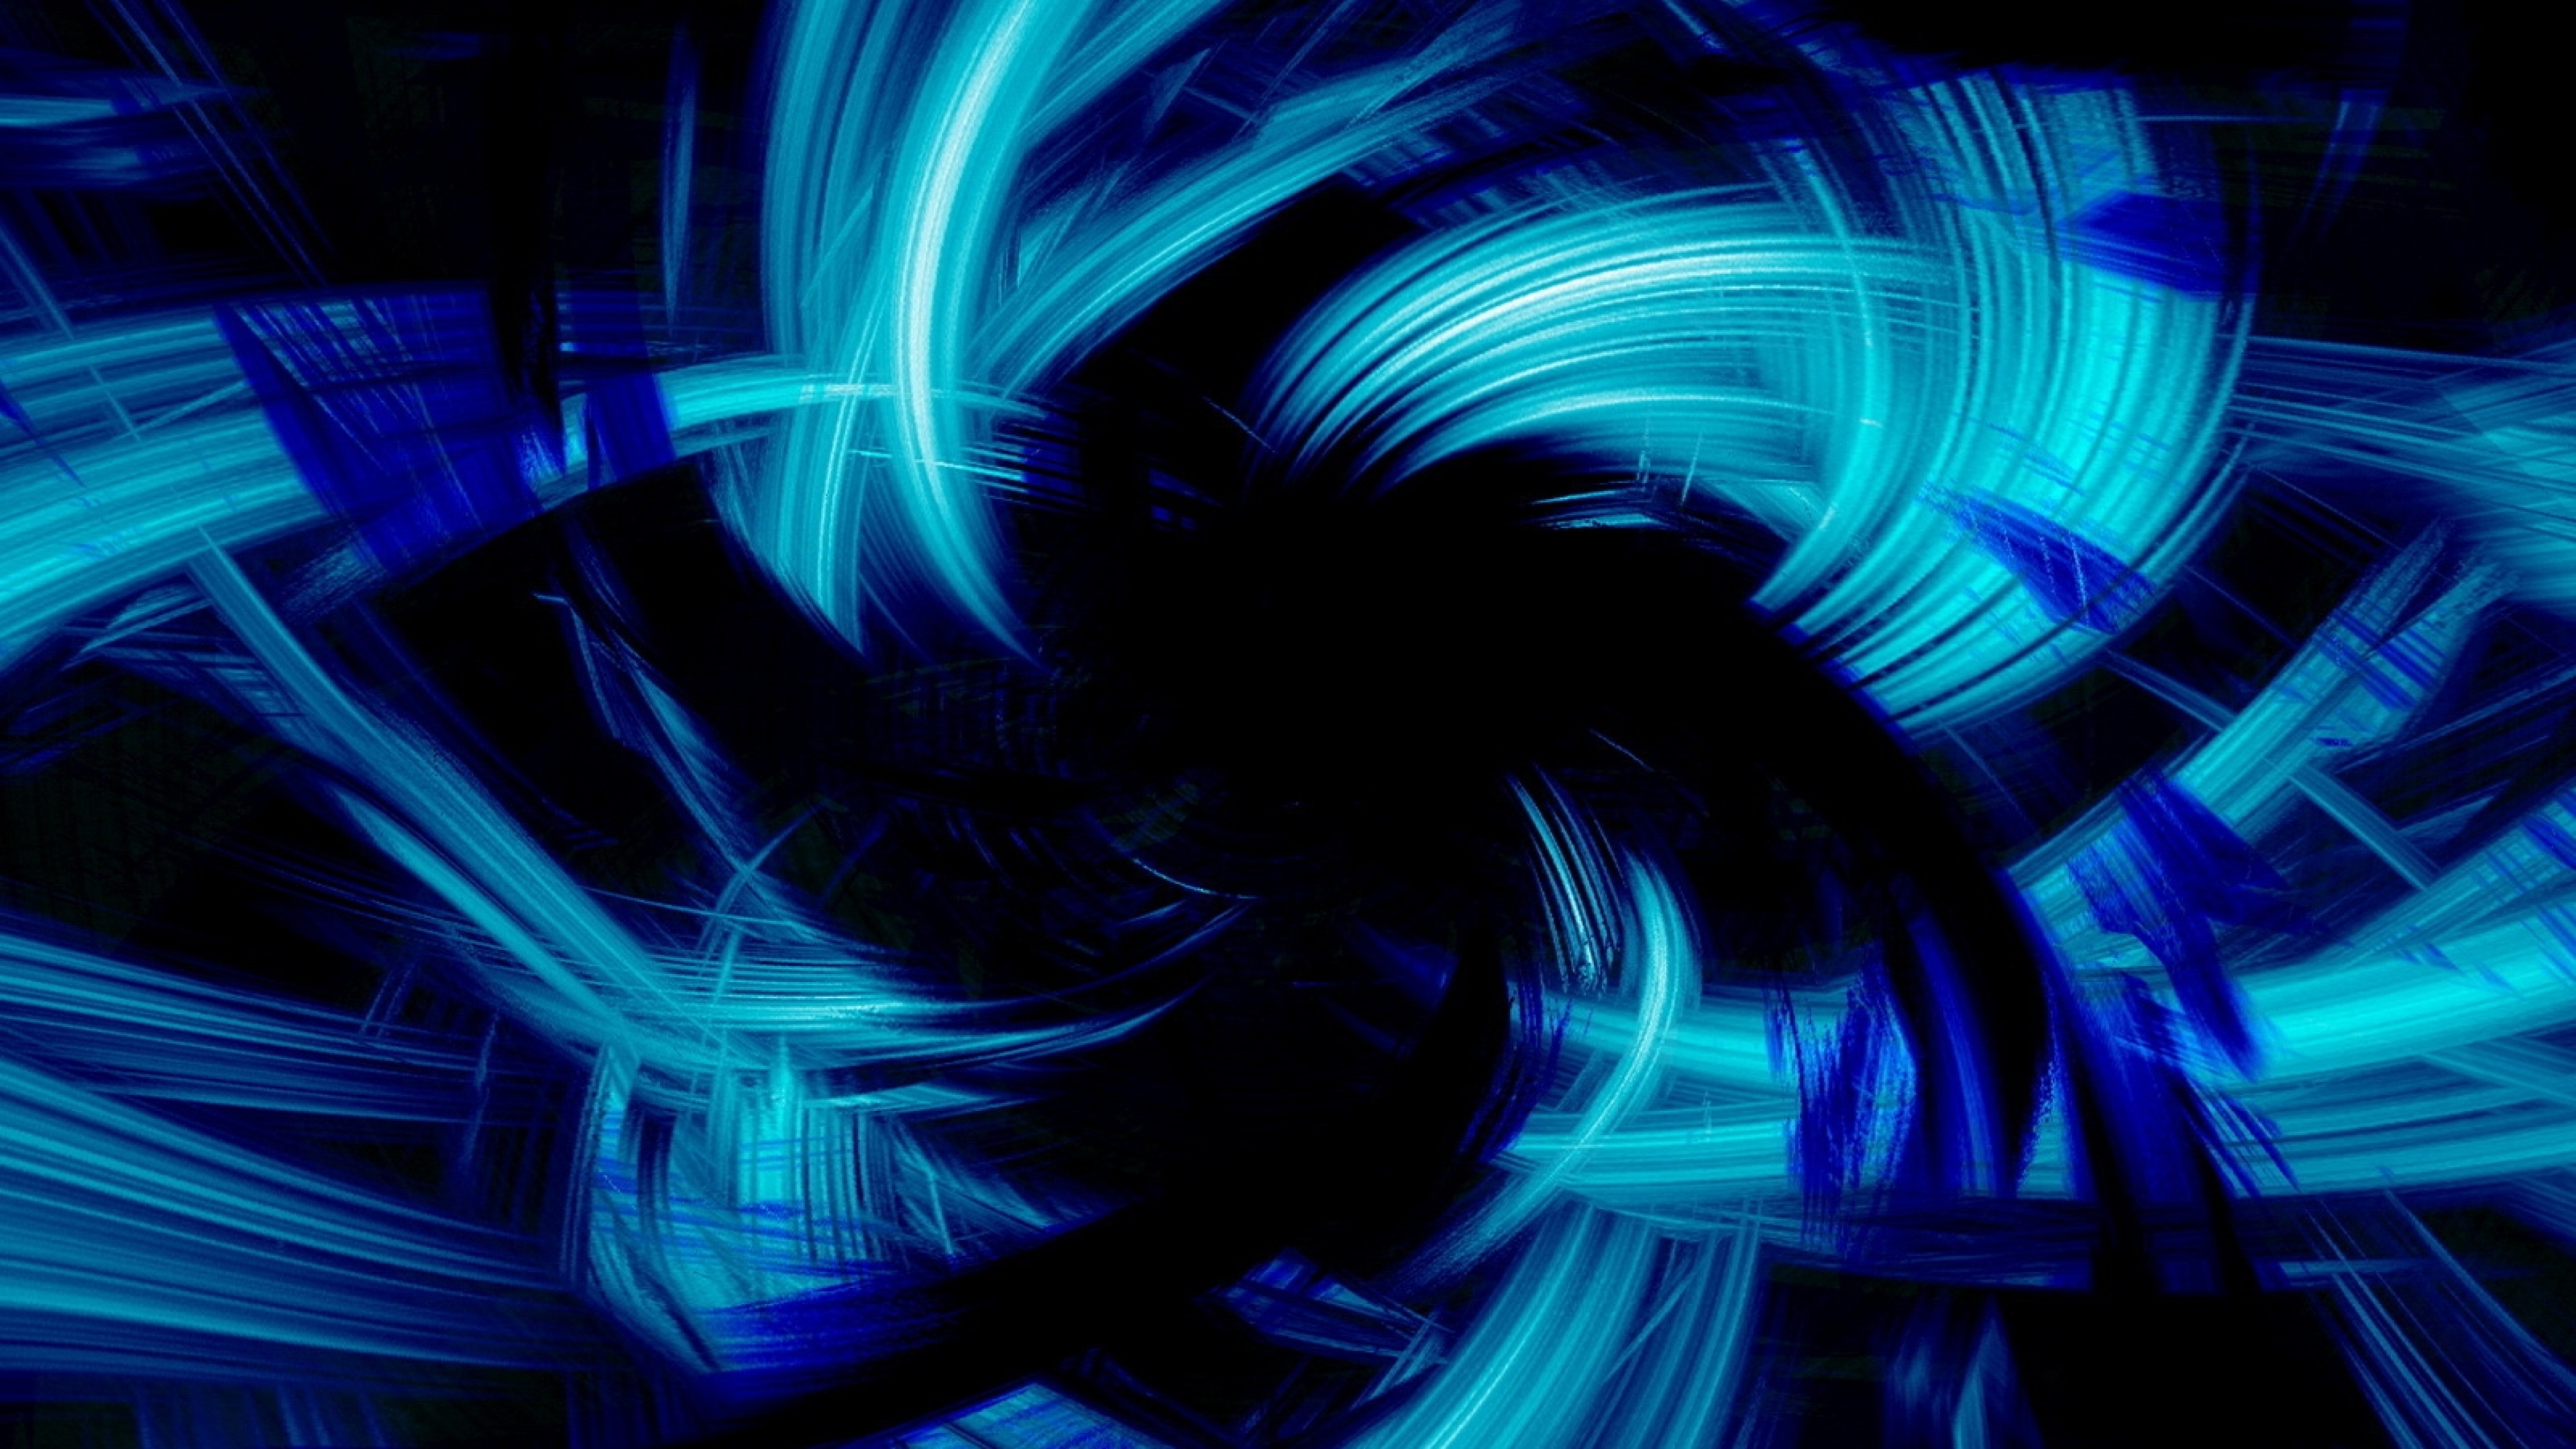 4k Neon Wallpaper Background - Blue Neon Wallpaper 4k - 3840x2160 Wallpaper  